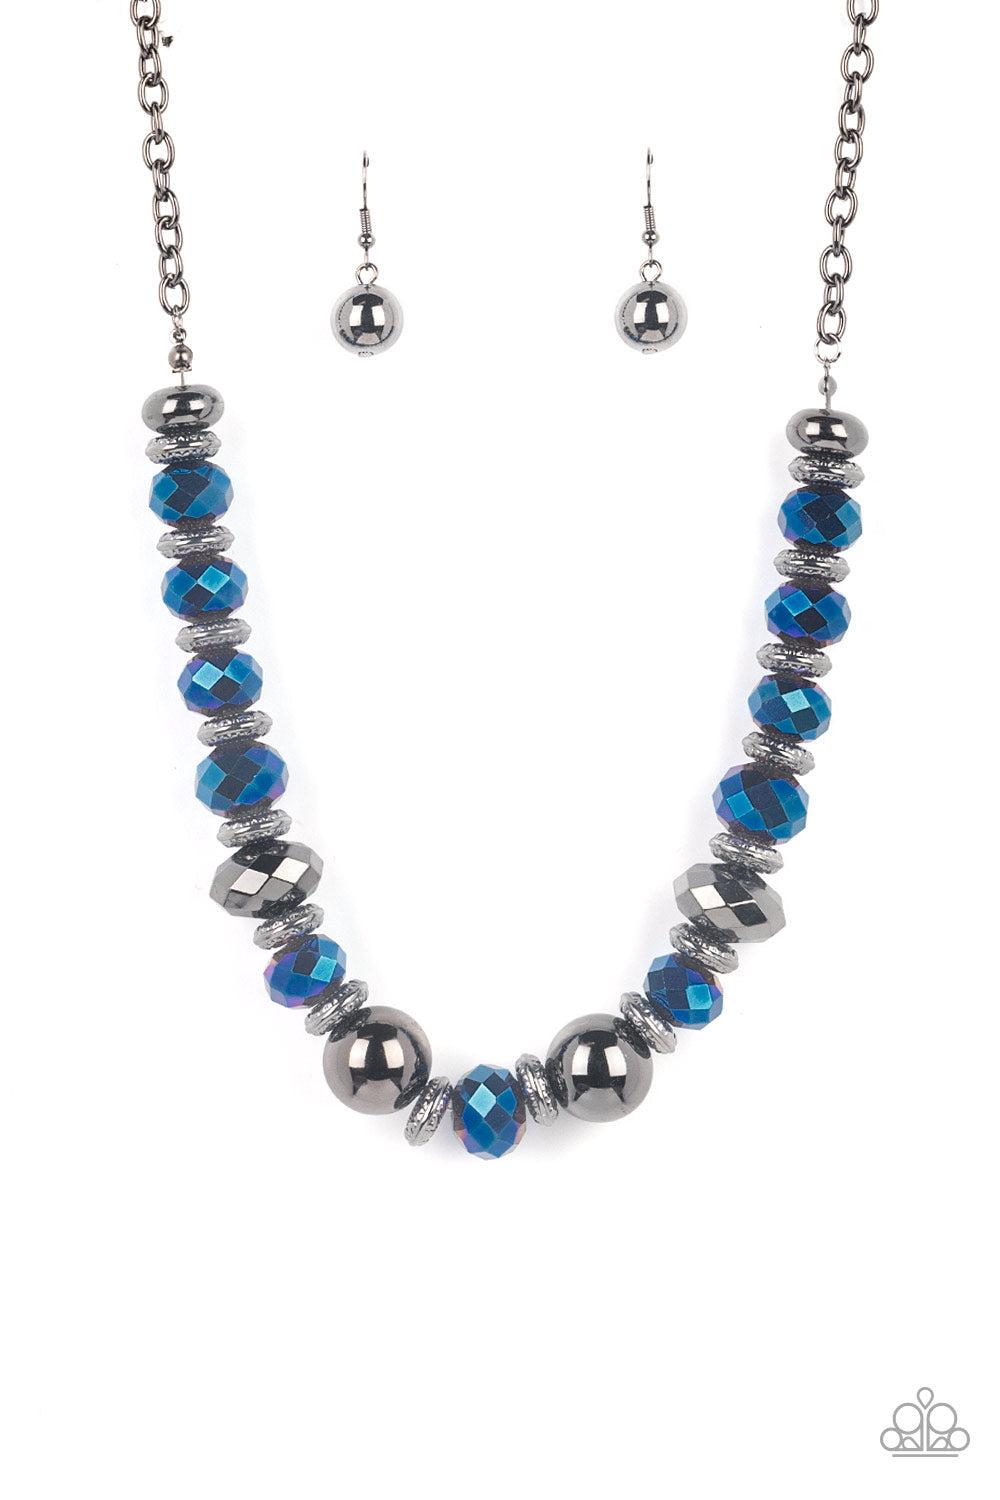 Interstellar Influencer Blue Necklace - Paparazzi Accessories- lightbox - CarasShop.com - $5 Jewelry by Cara Jewels